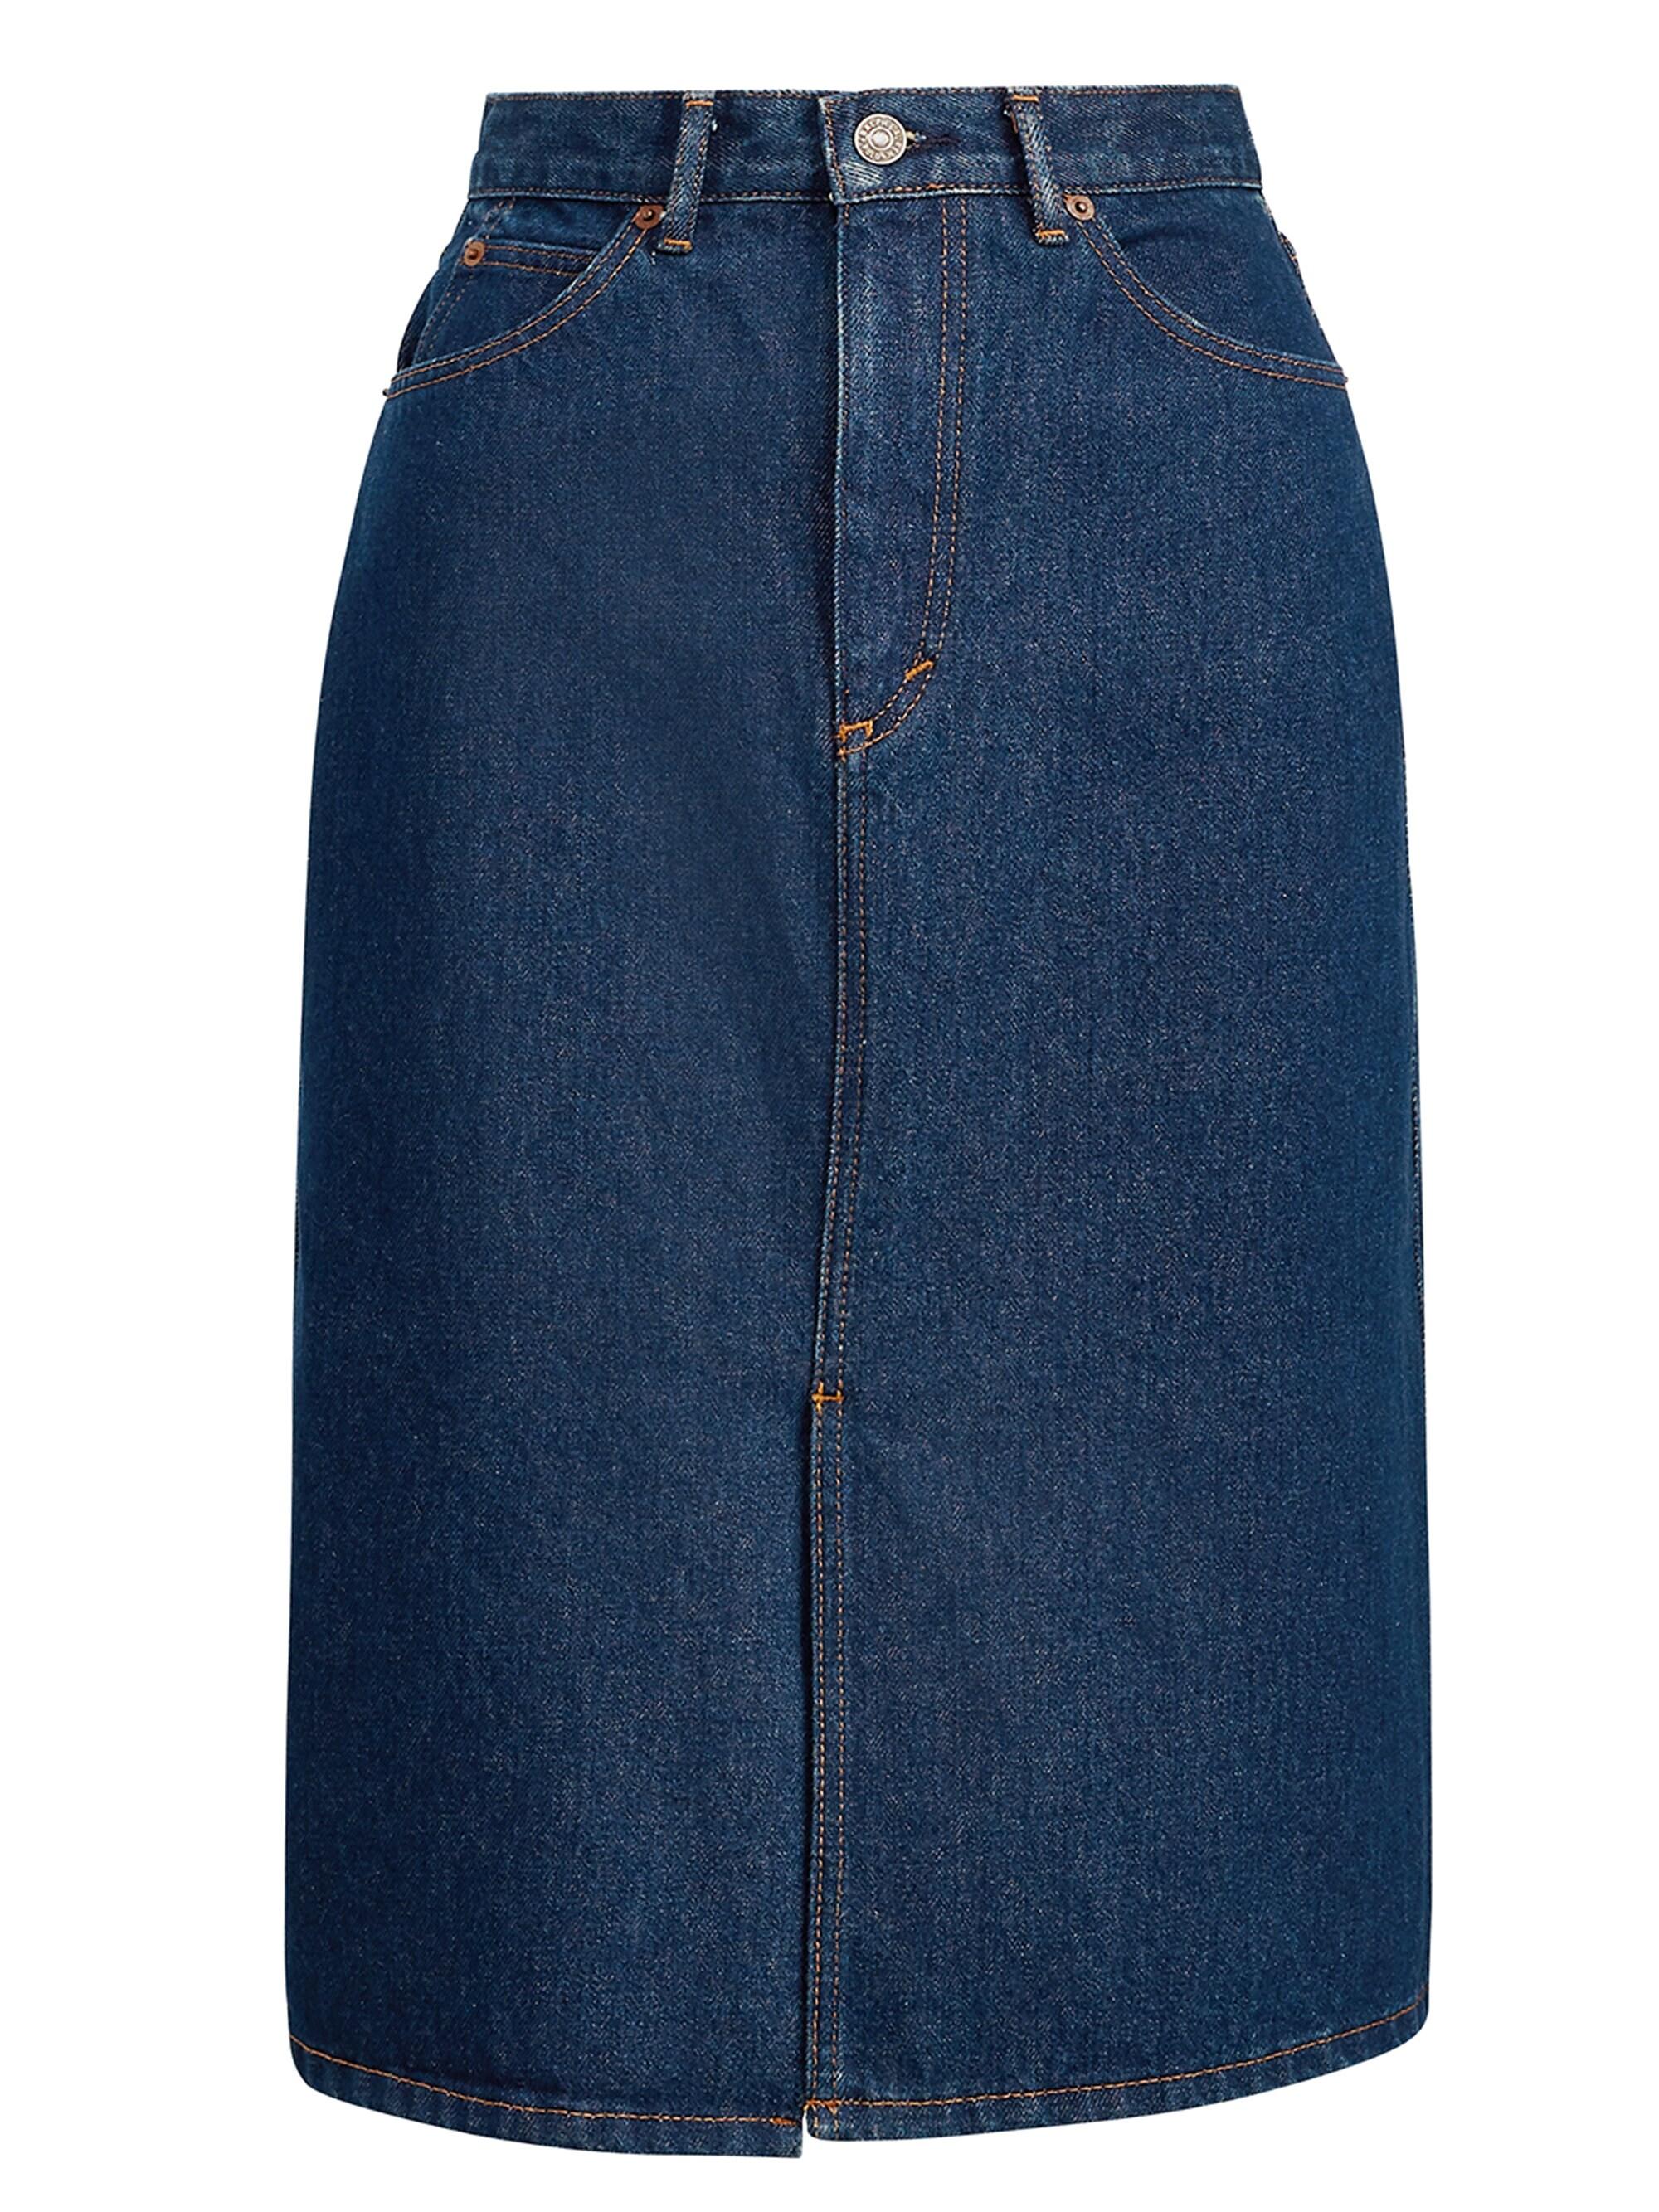 Polo Ralph Lauren A-line Denim Midi Skirt in Blue - Lyst